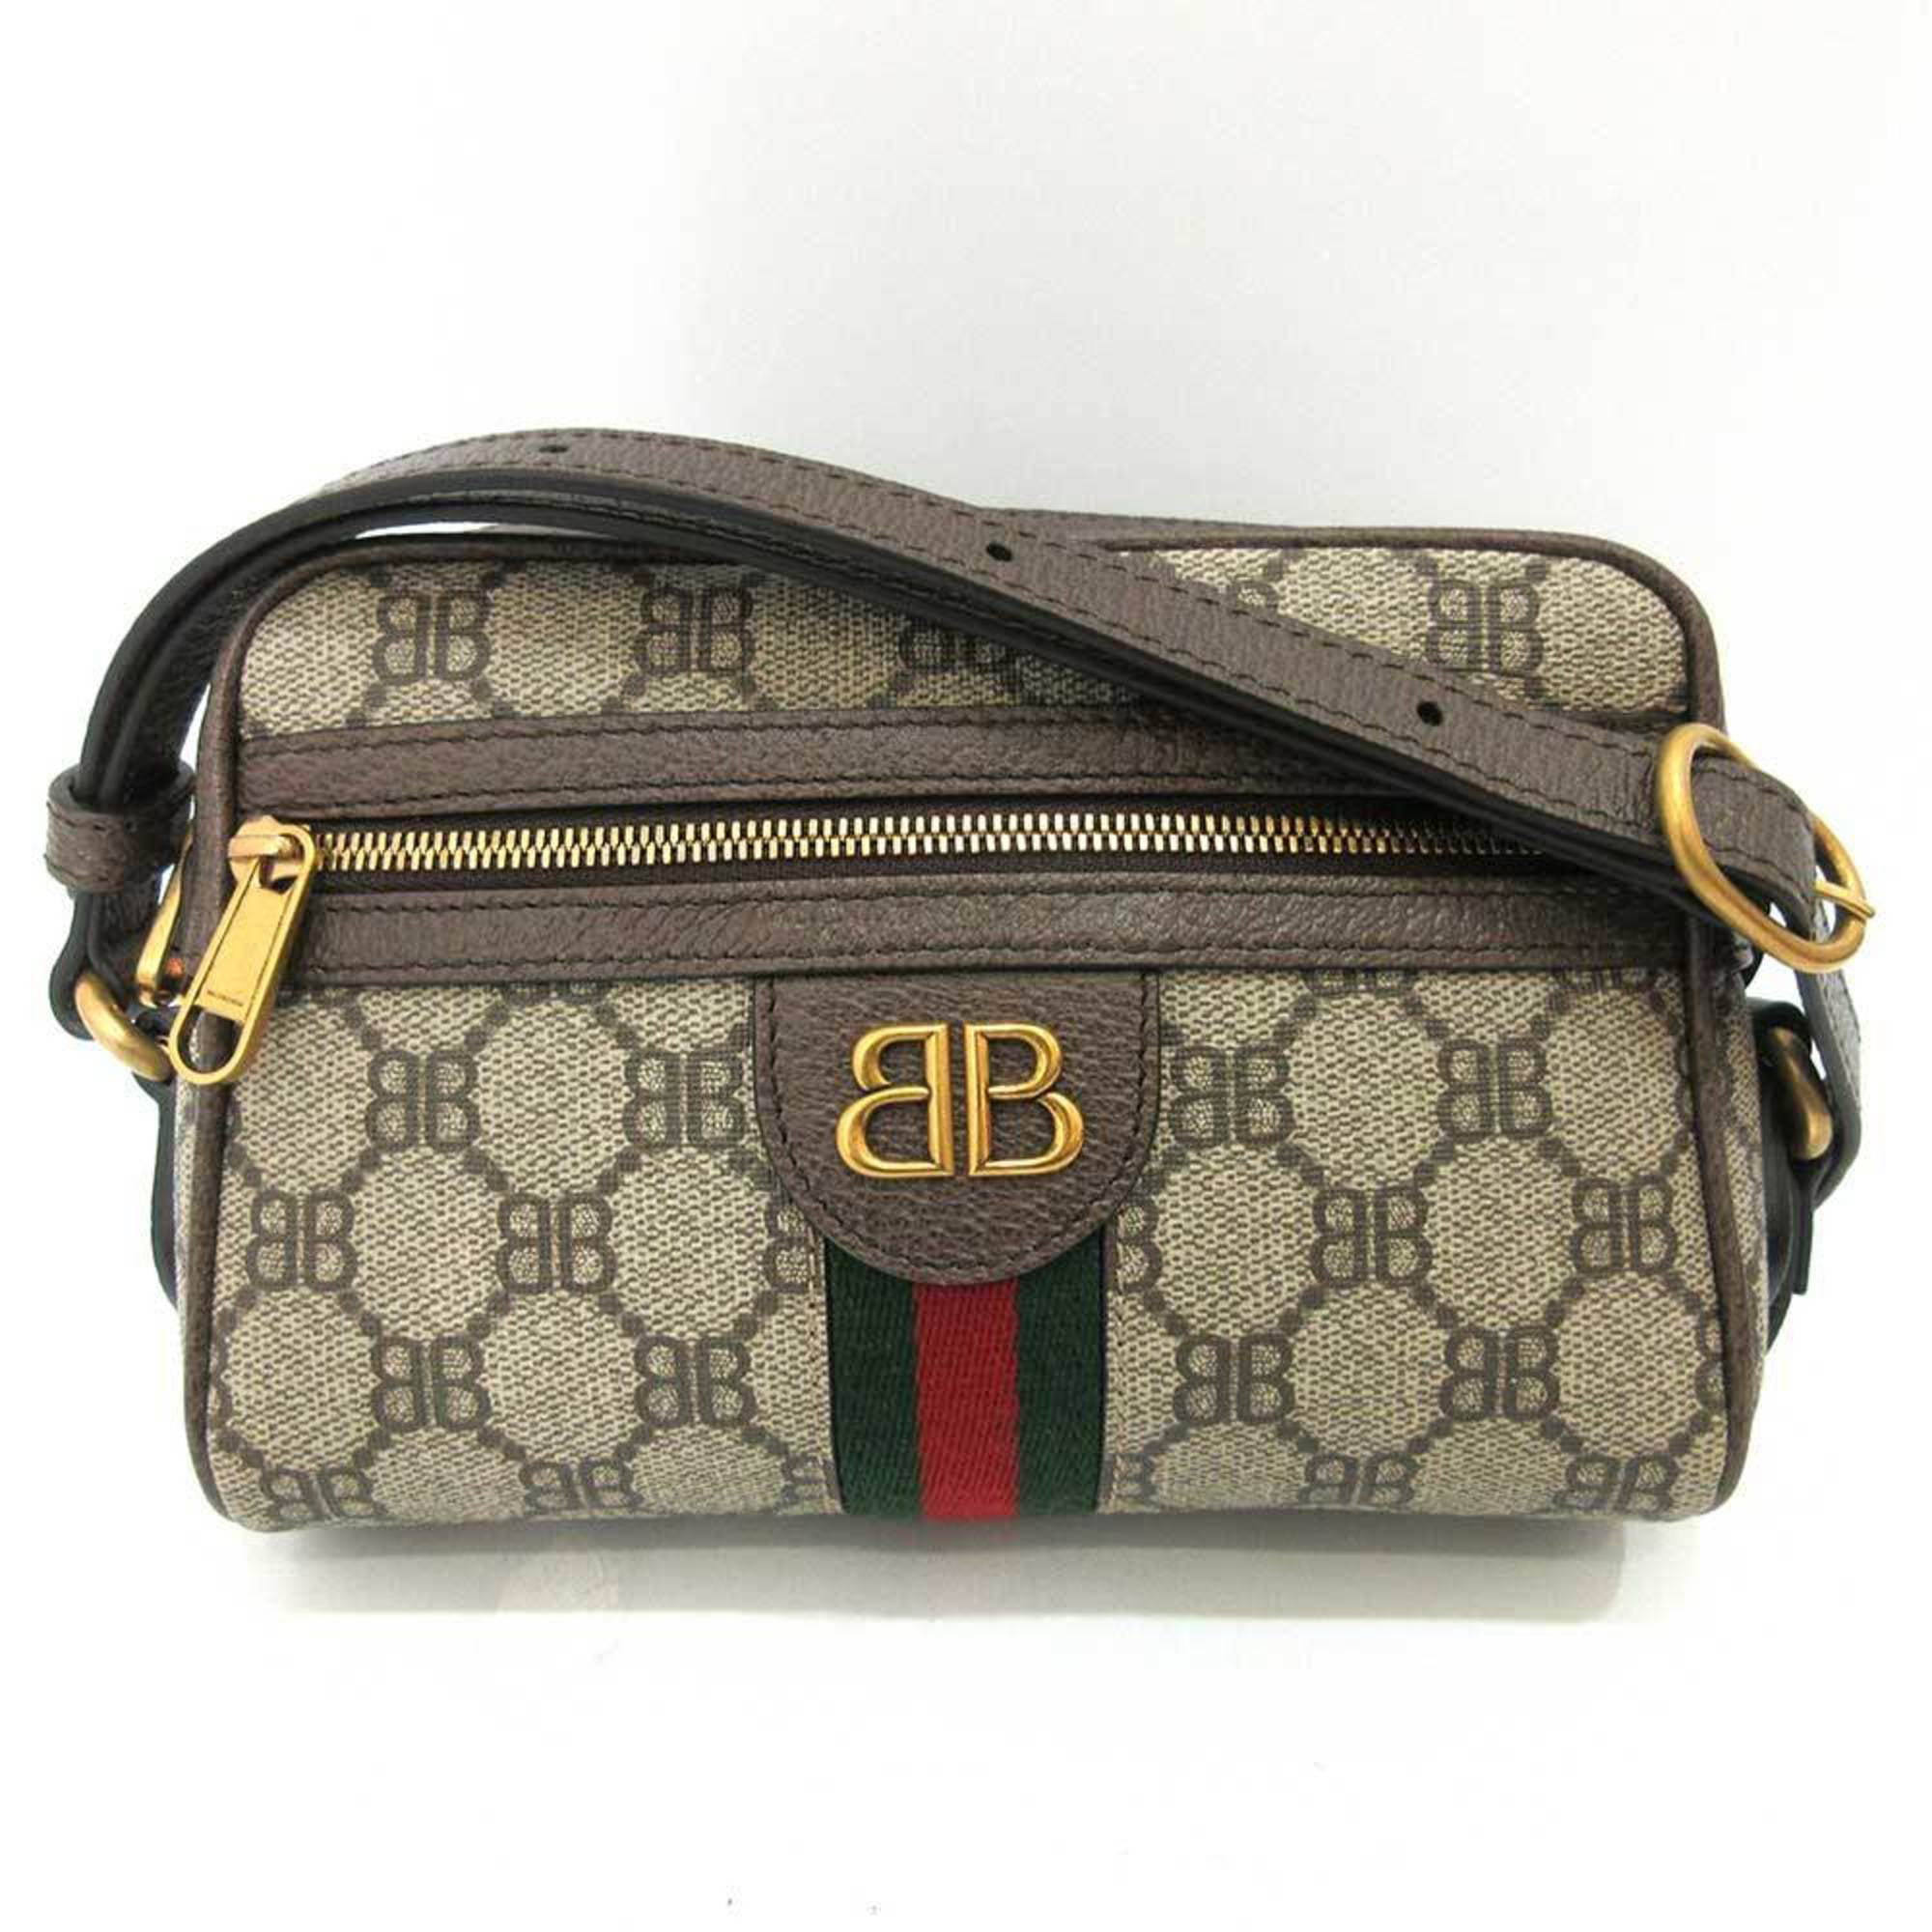 Gucci Pochette Bag Review 